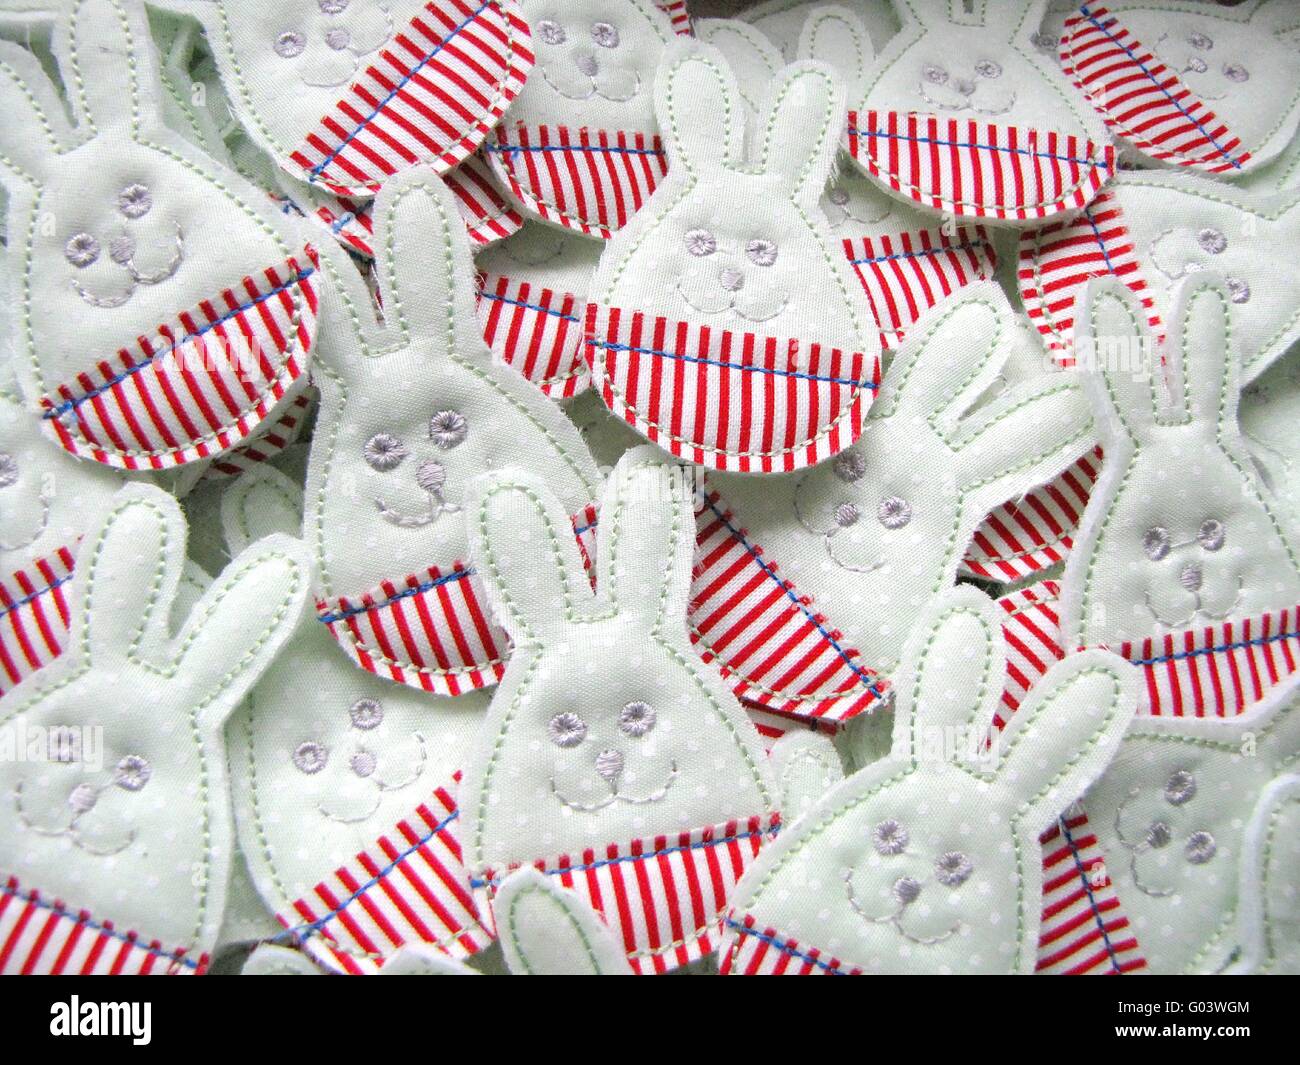 Easter bunnies Stock Photo